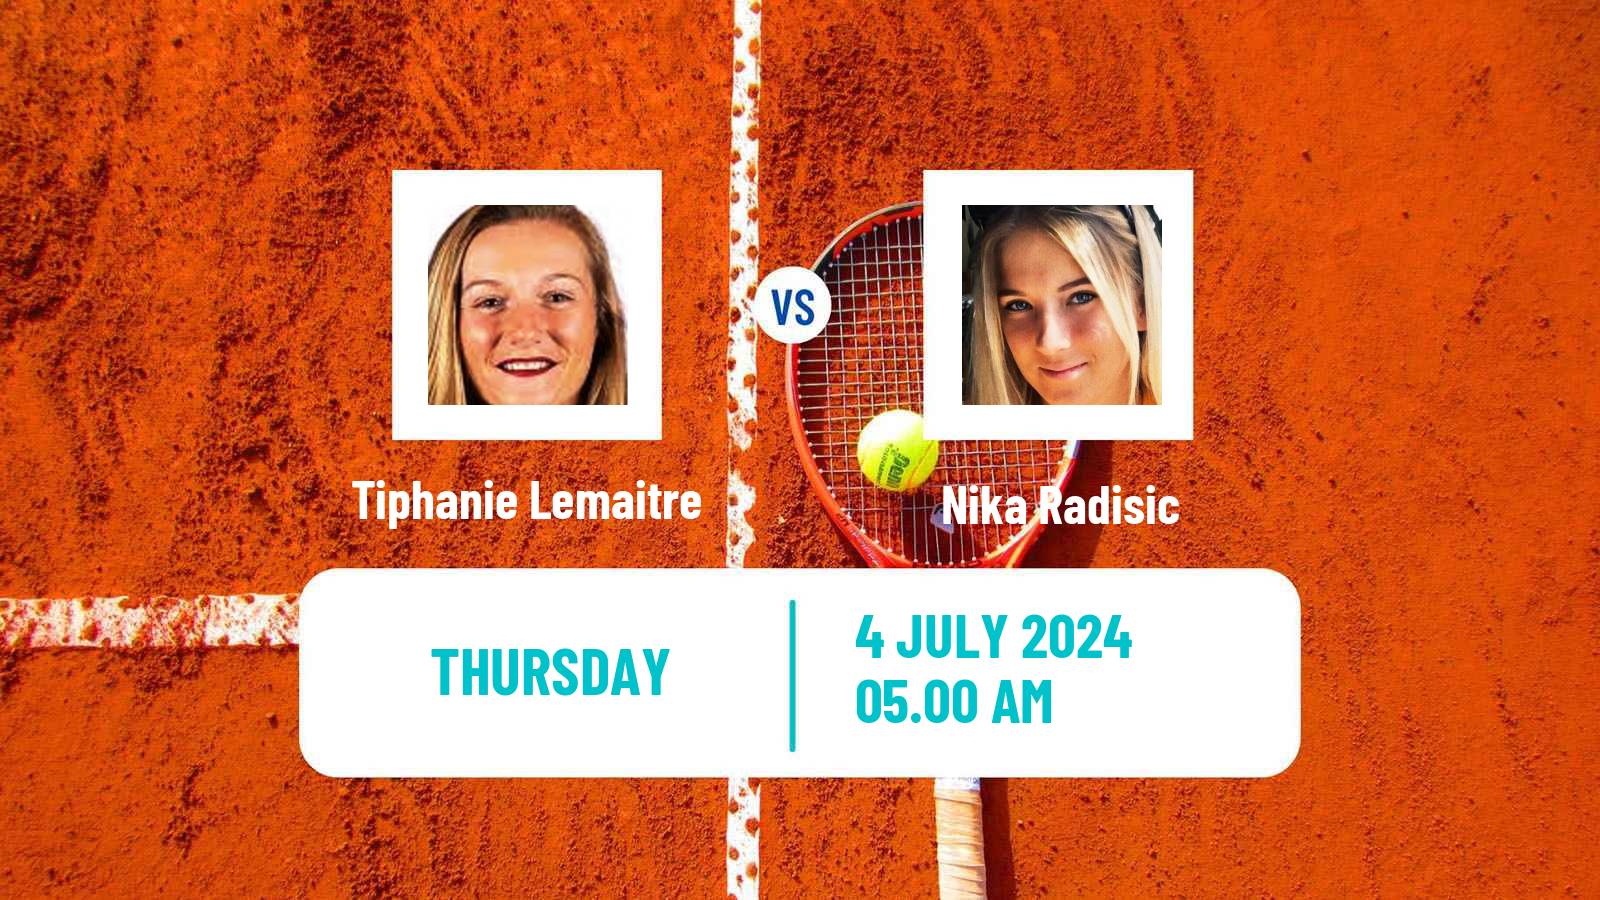 Tennis ITF W35 Stuttgart Vaihingen Women Tiphanie Lemaitre - Nika Radisic